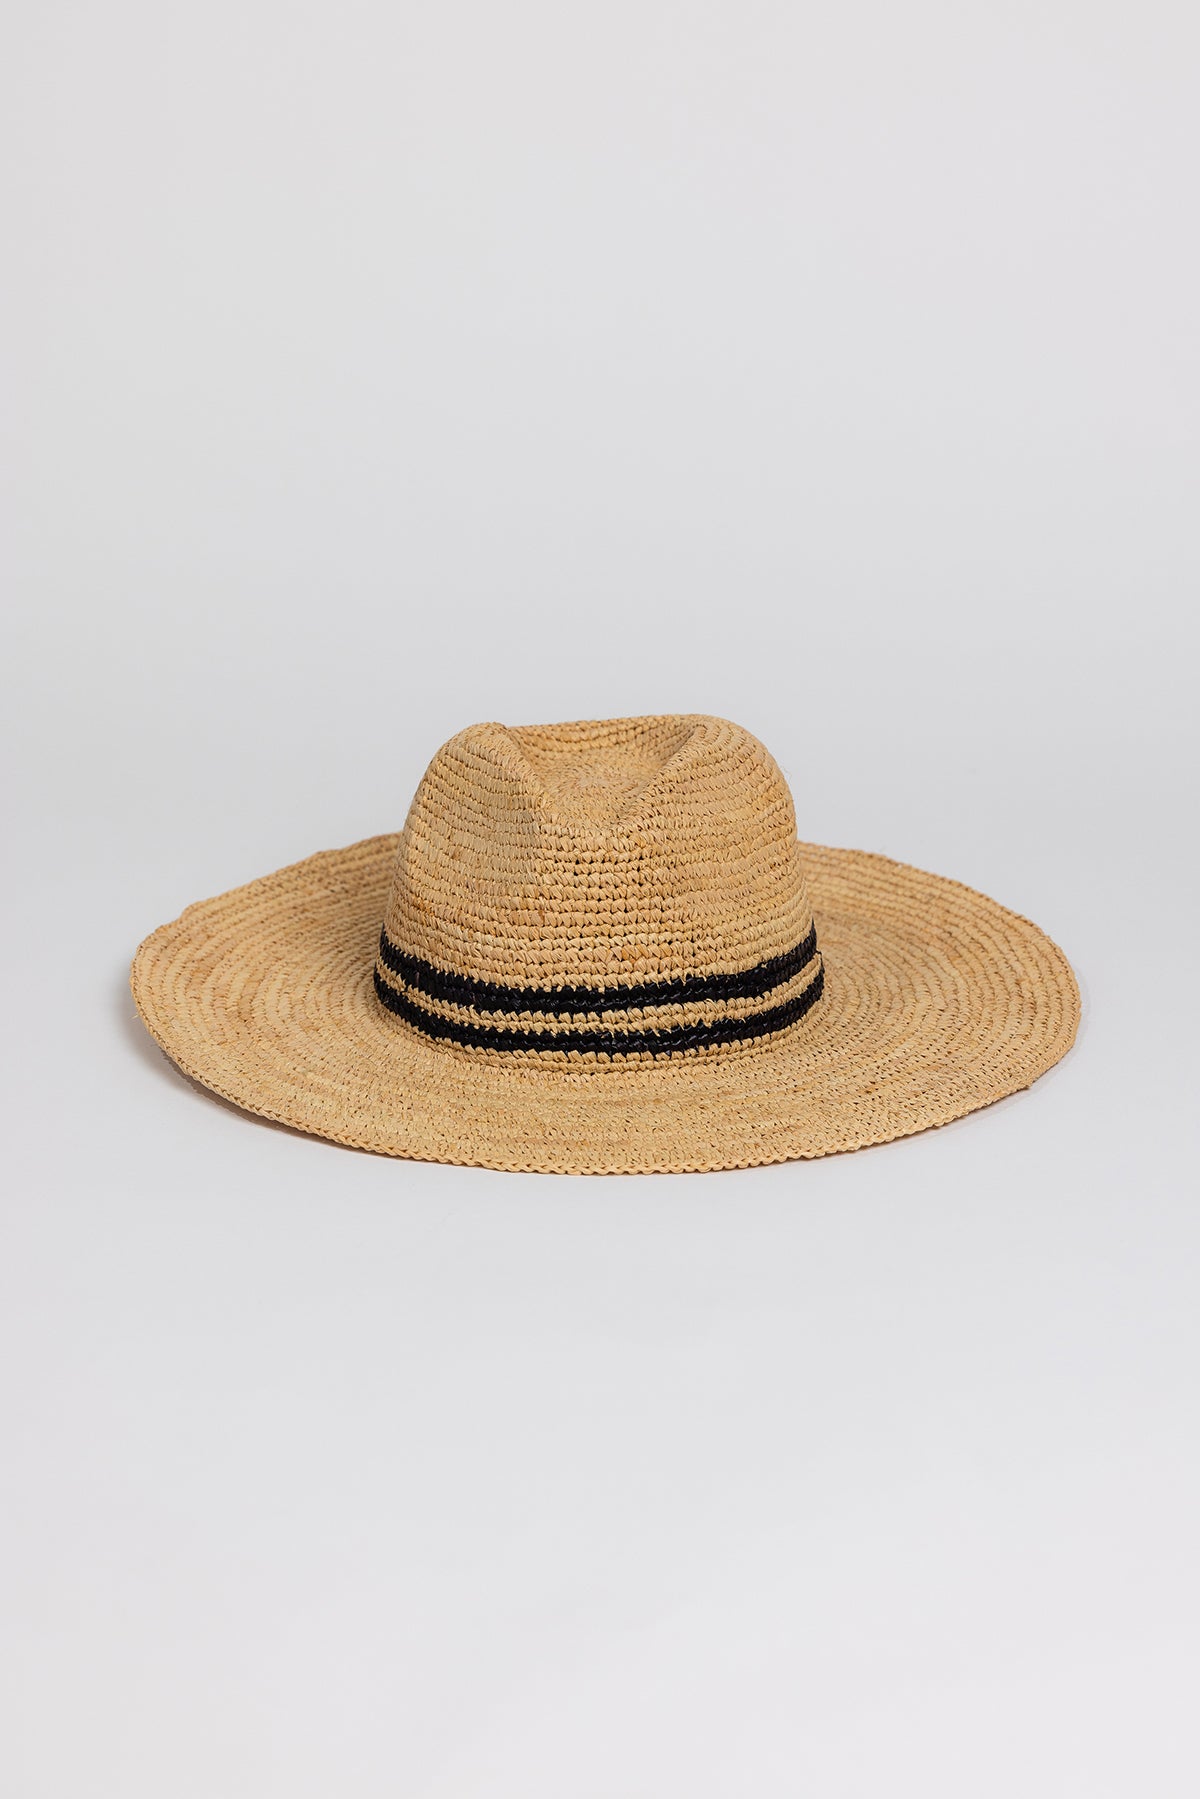 a SADONA RANCHER HAT with a black stripe, by Velvet by Graham & Spencer.-26166337044673